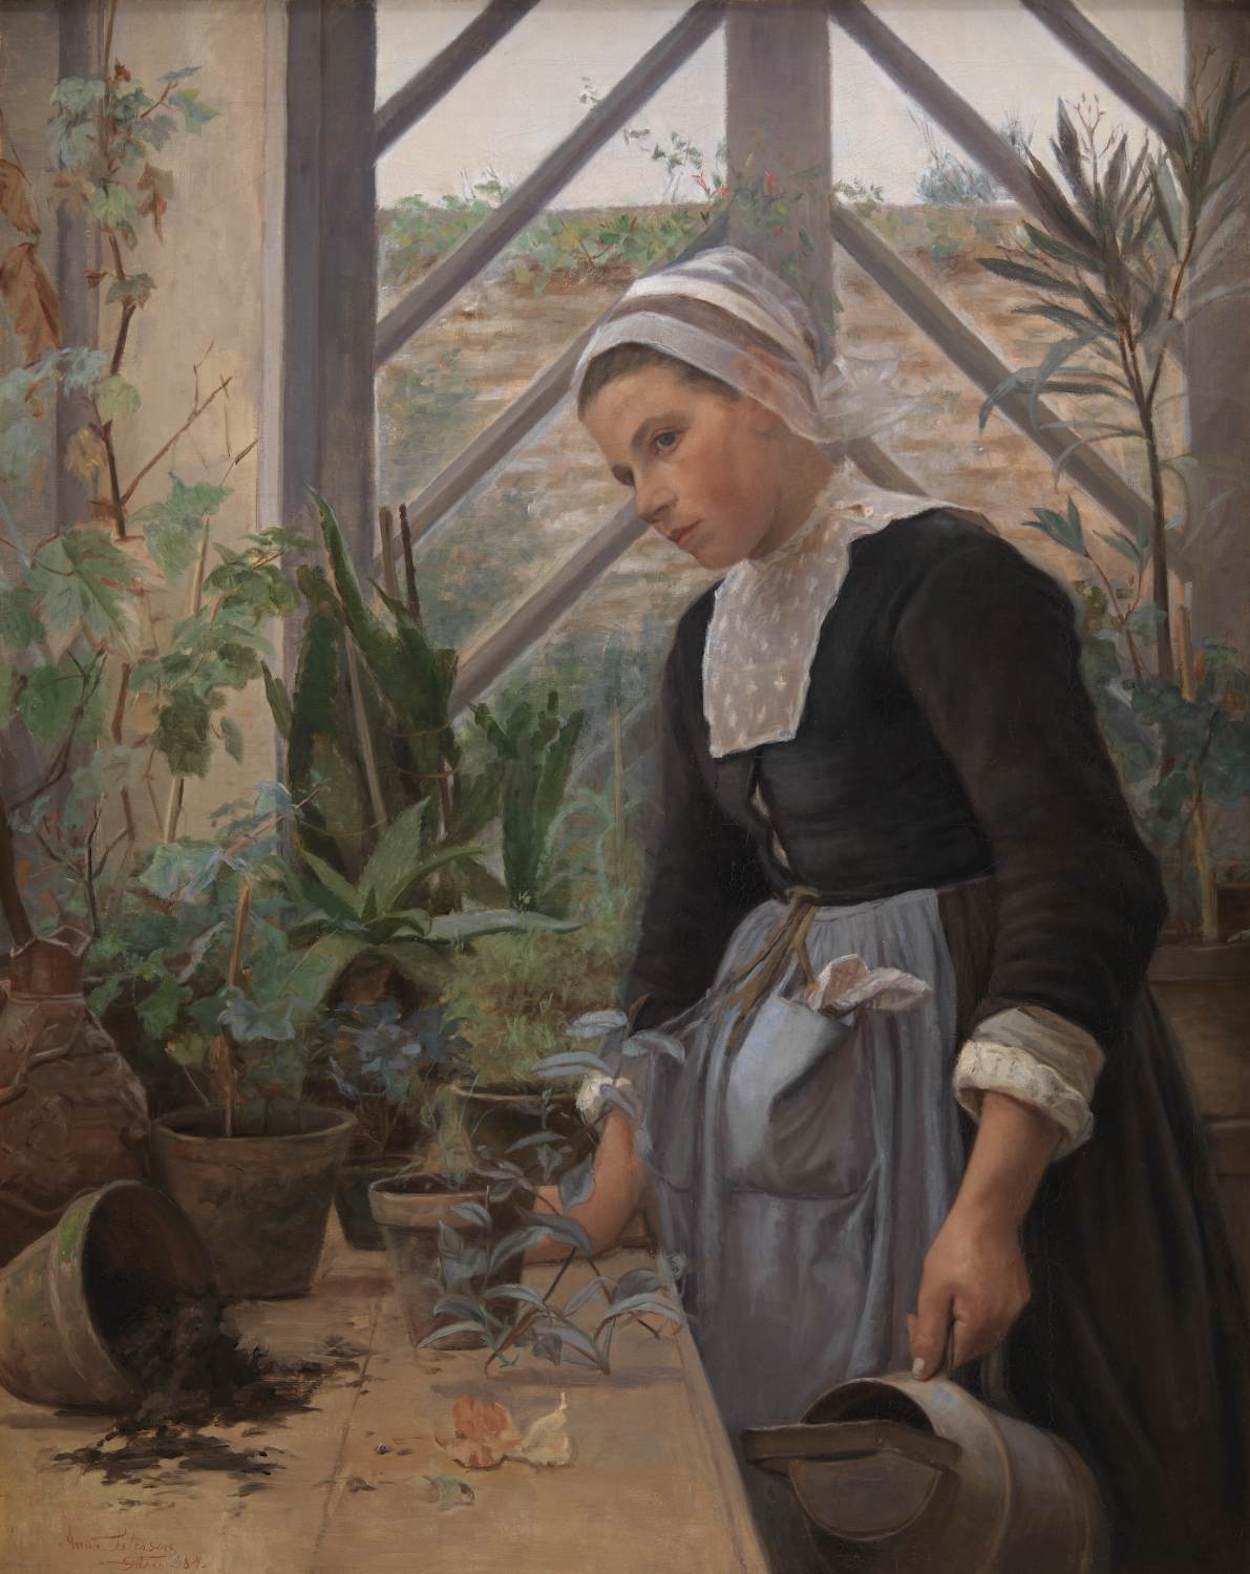 Garota Bretã Cuidando de Plantas na Estufa by Anna Petersen - 1884 - 121 x 110 cm 